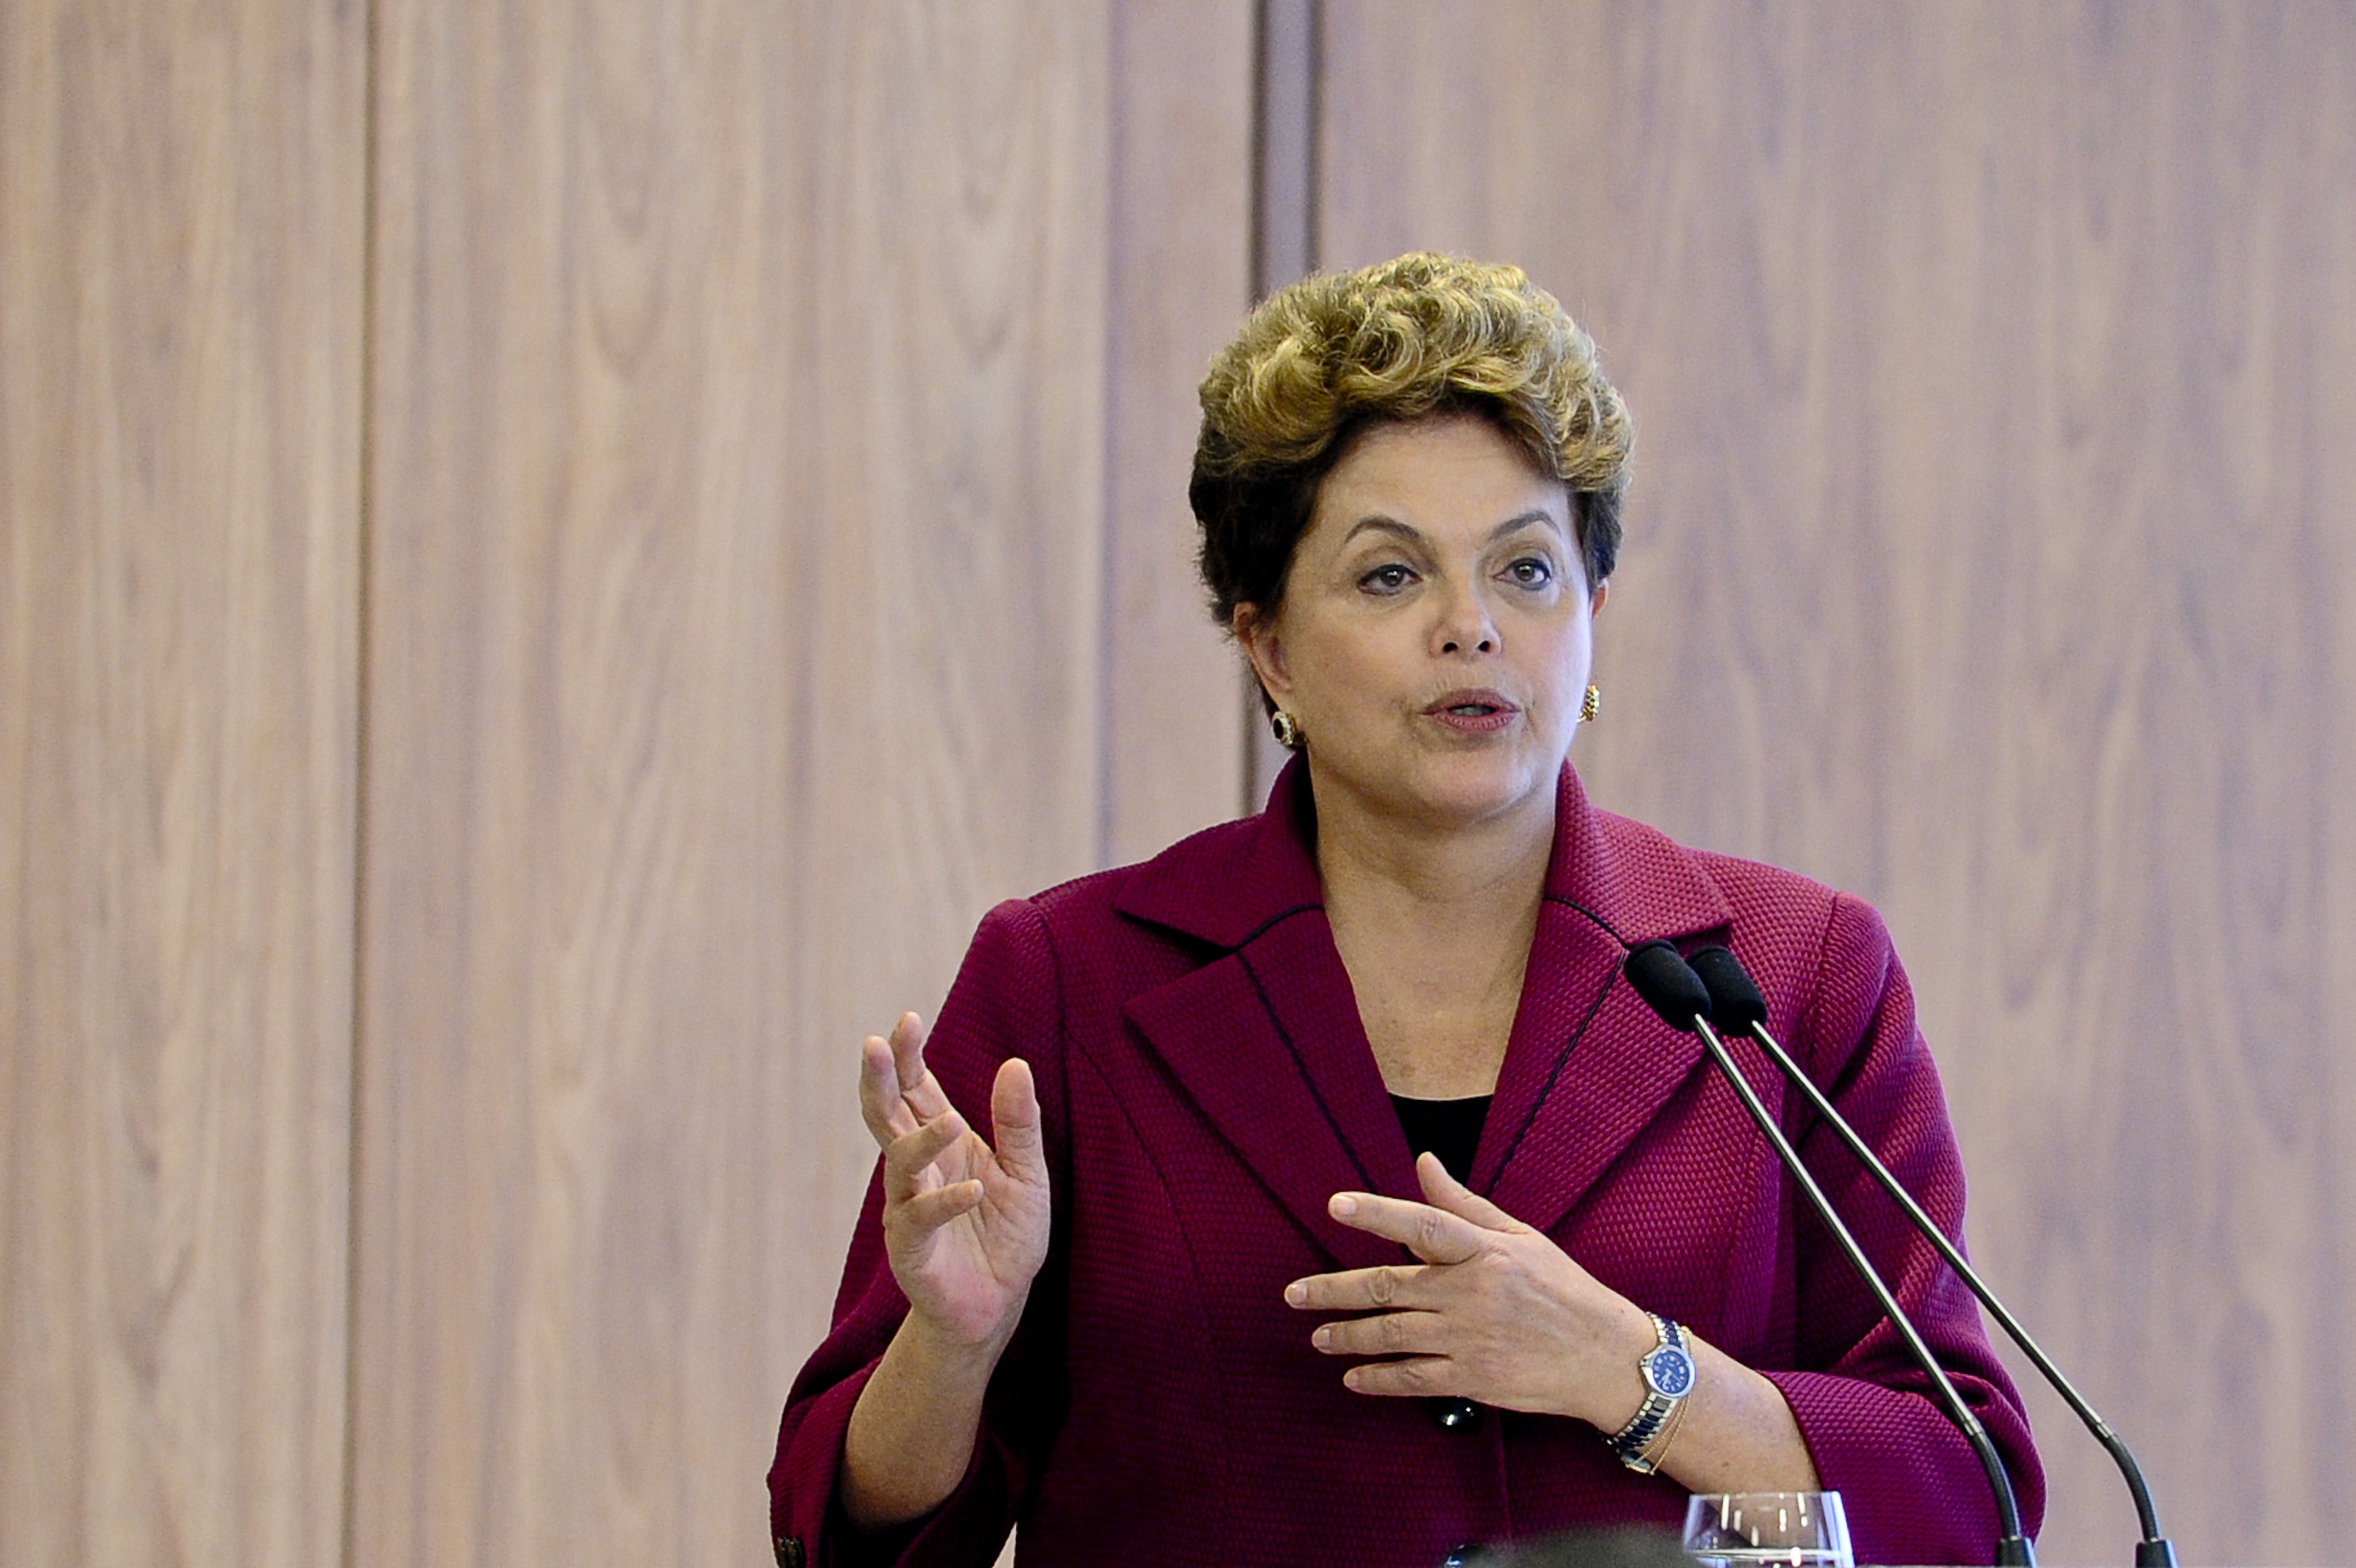 VÍDEO: “Sou presidente de banco”, diz Dilma sobre voar em 1ª classe; assista